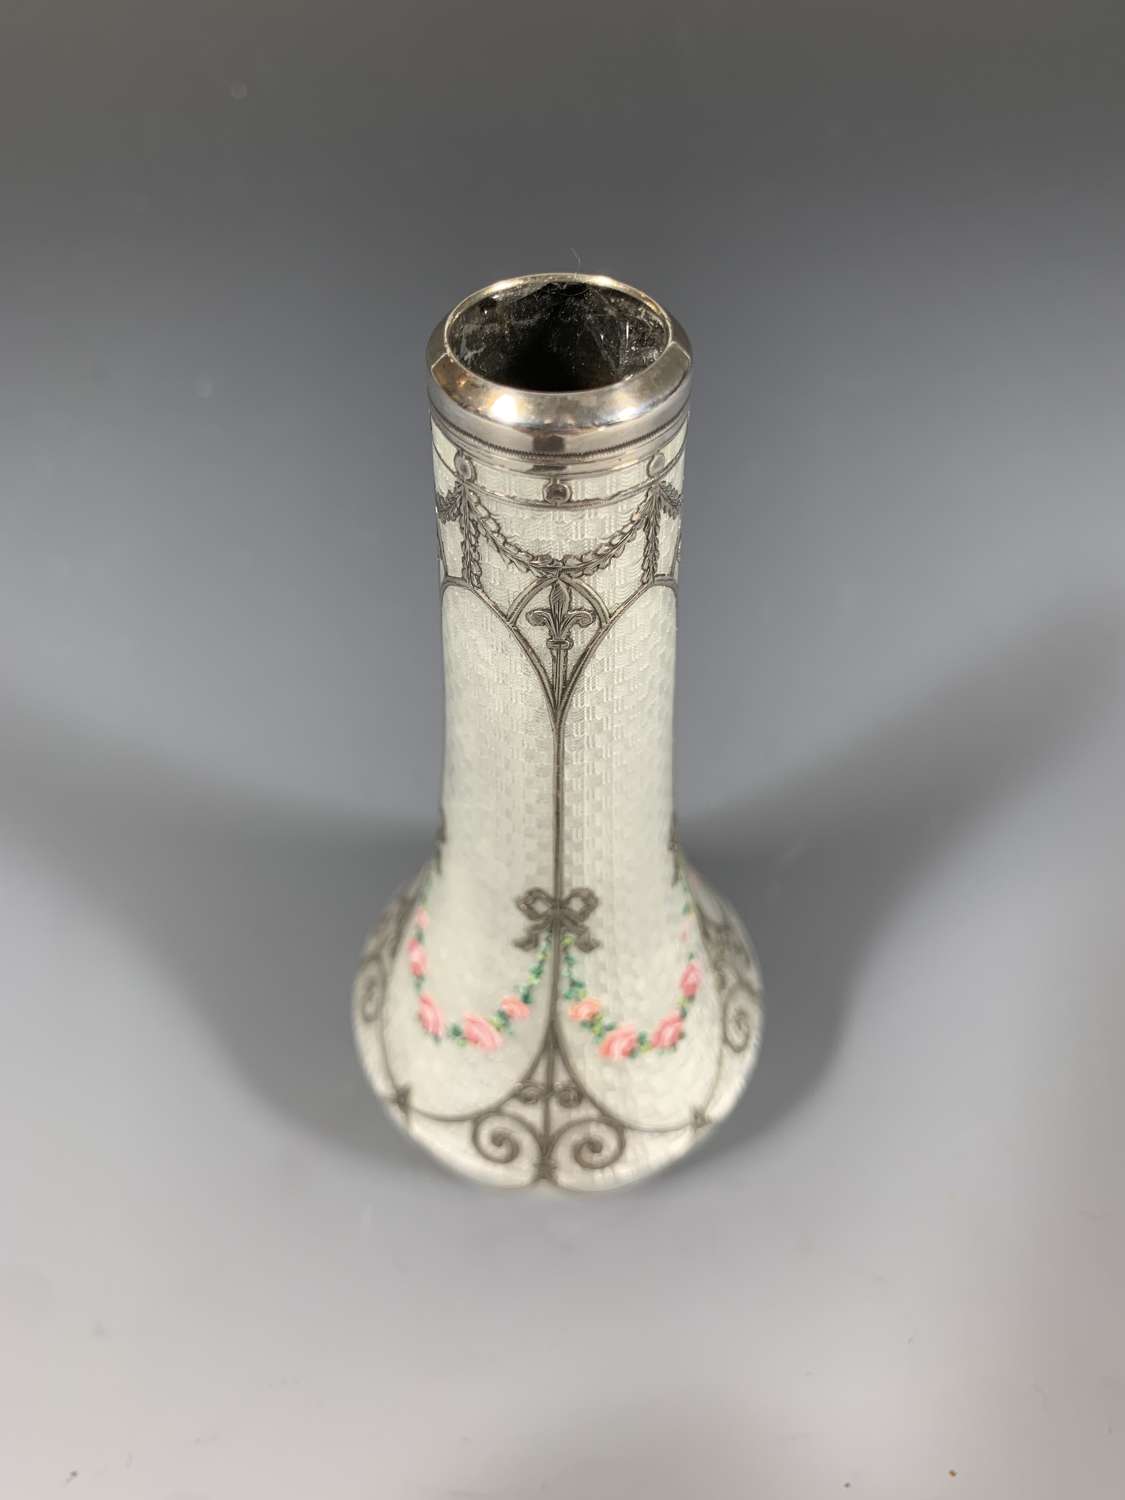 A 935 silver and guilloche enamel bud vase circa 1910